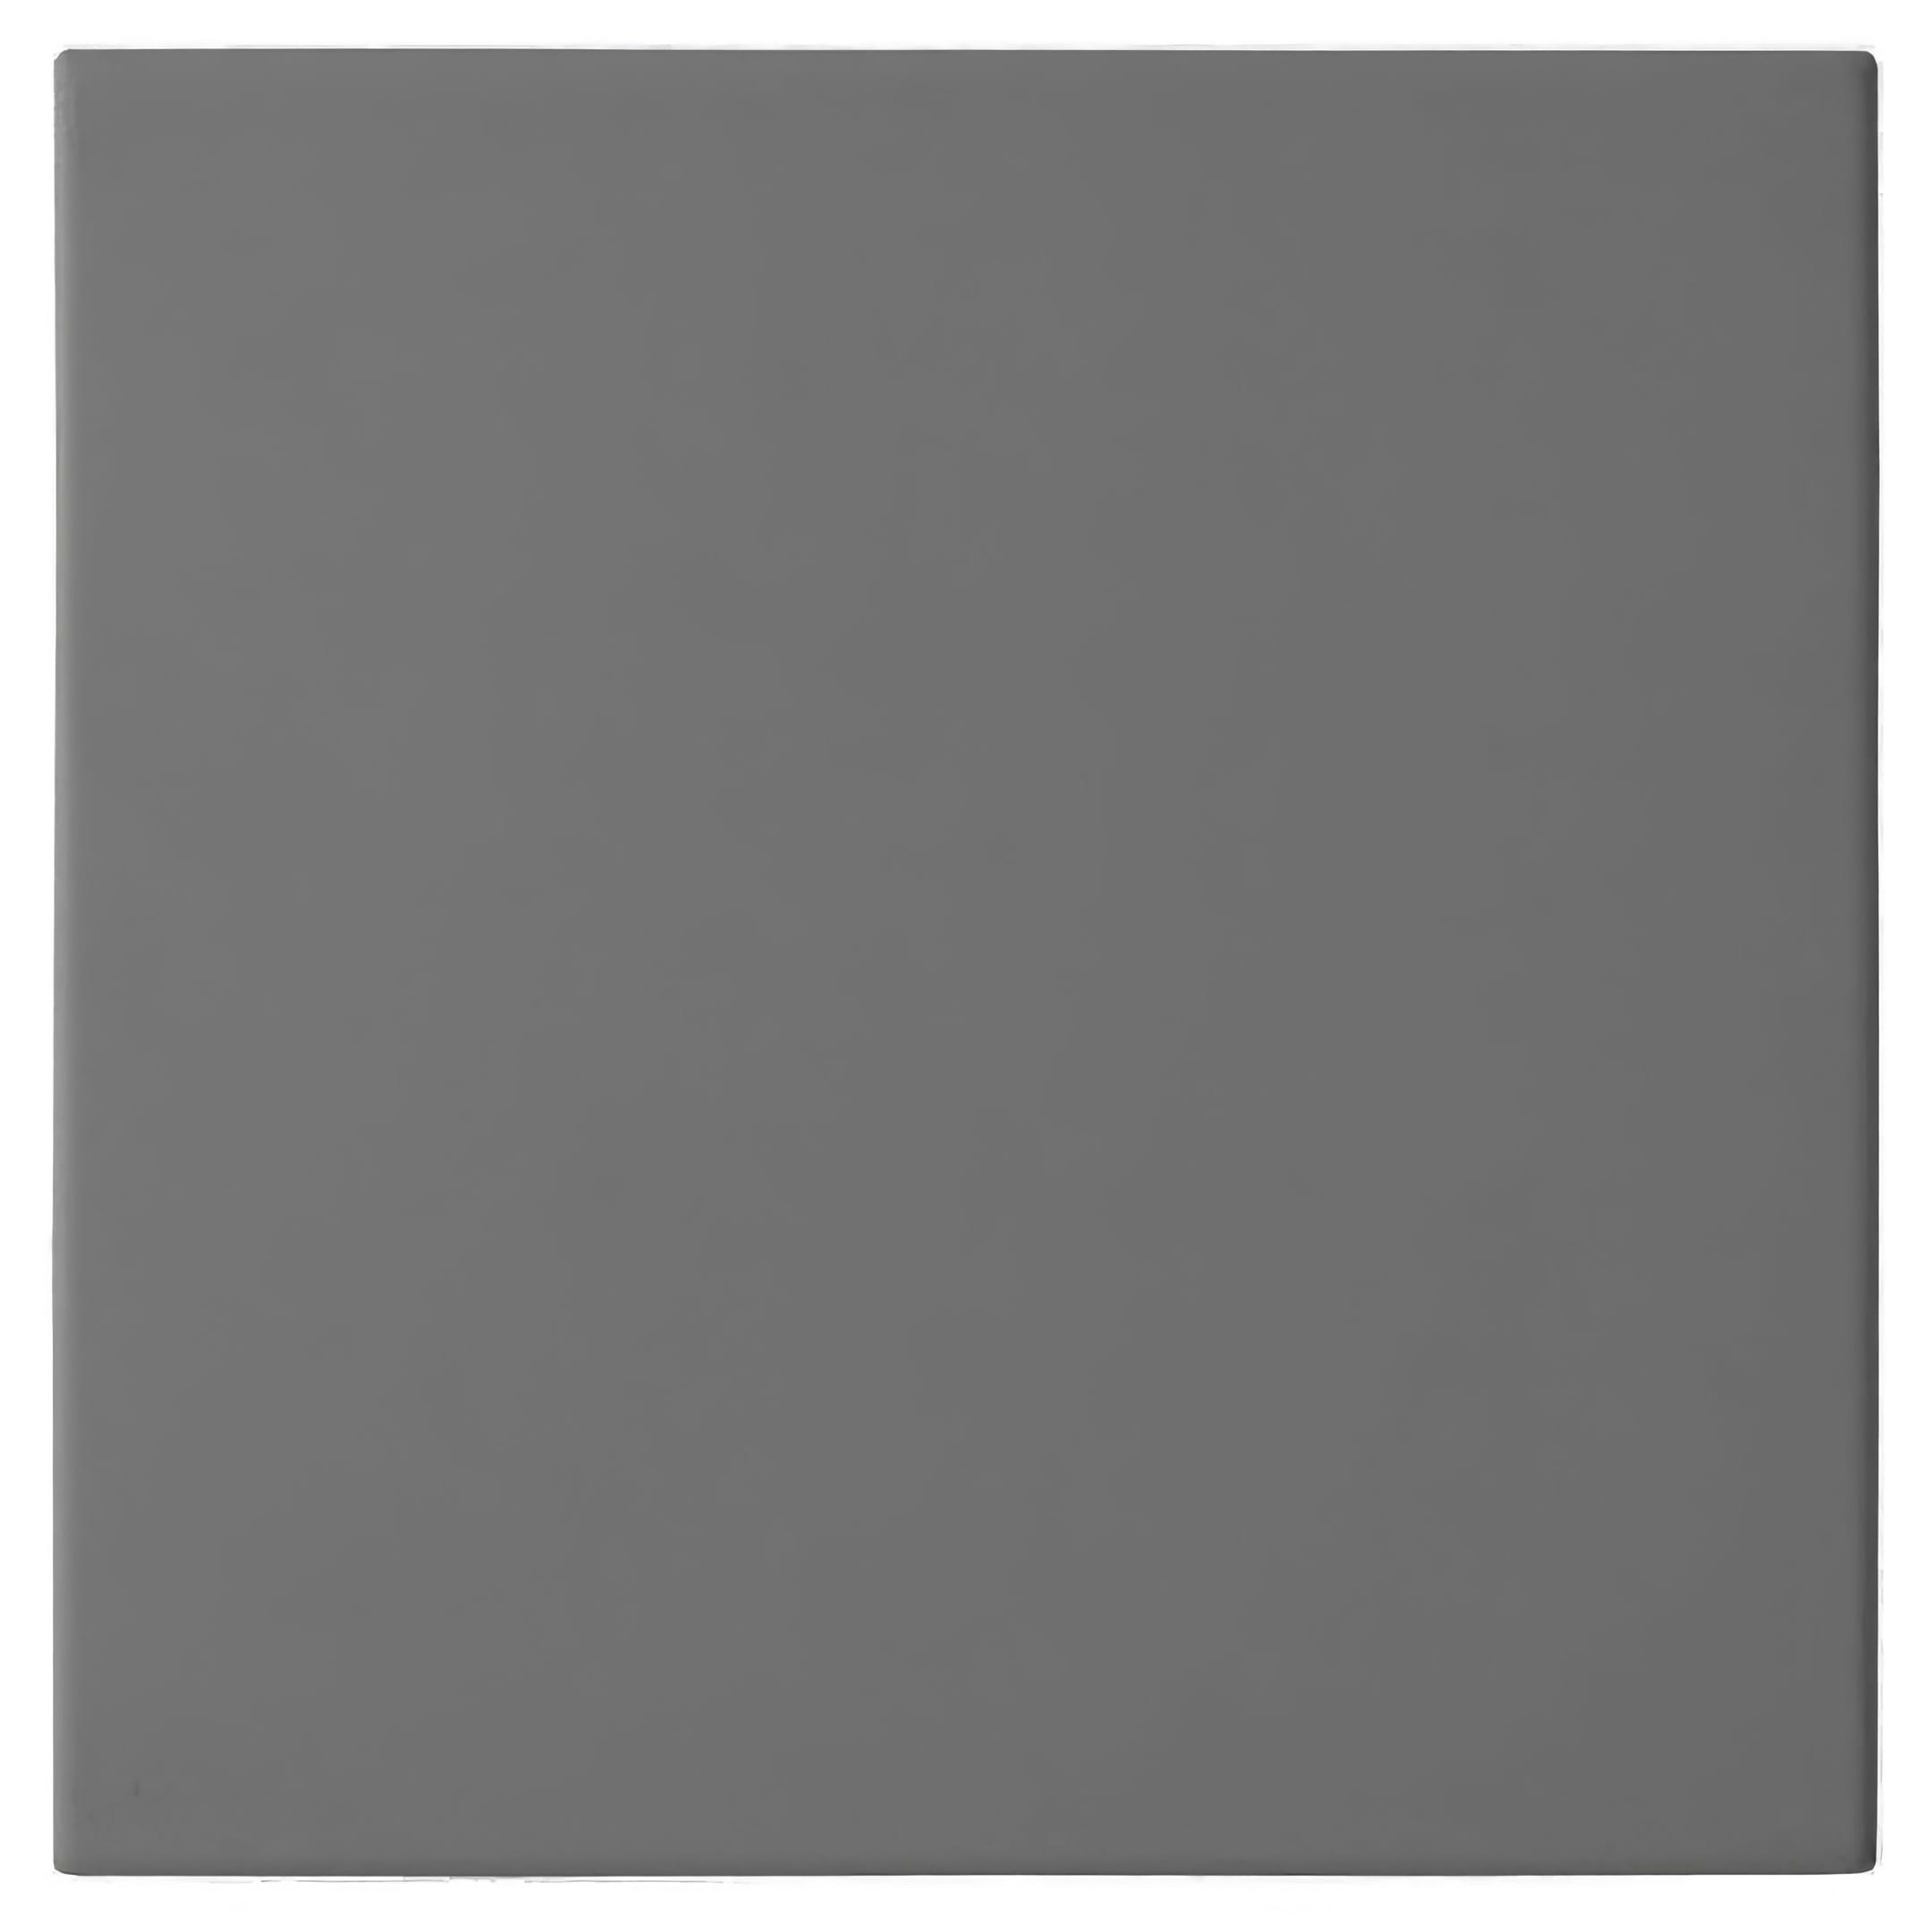 Co-ordinating Plain Tile Grey